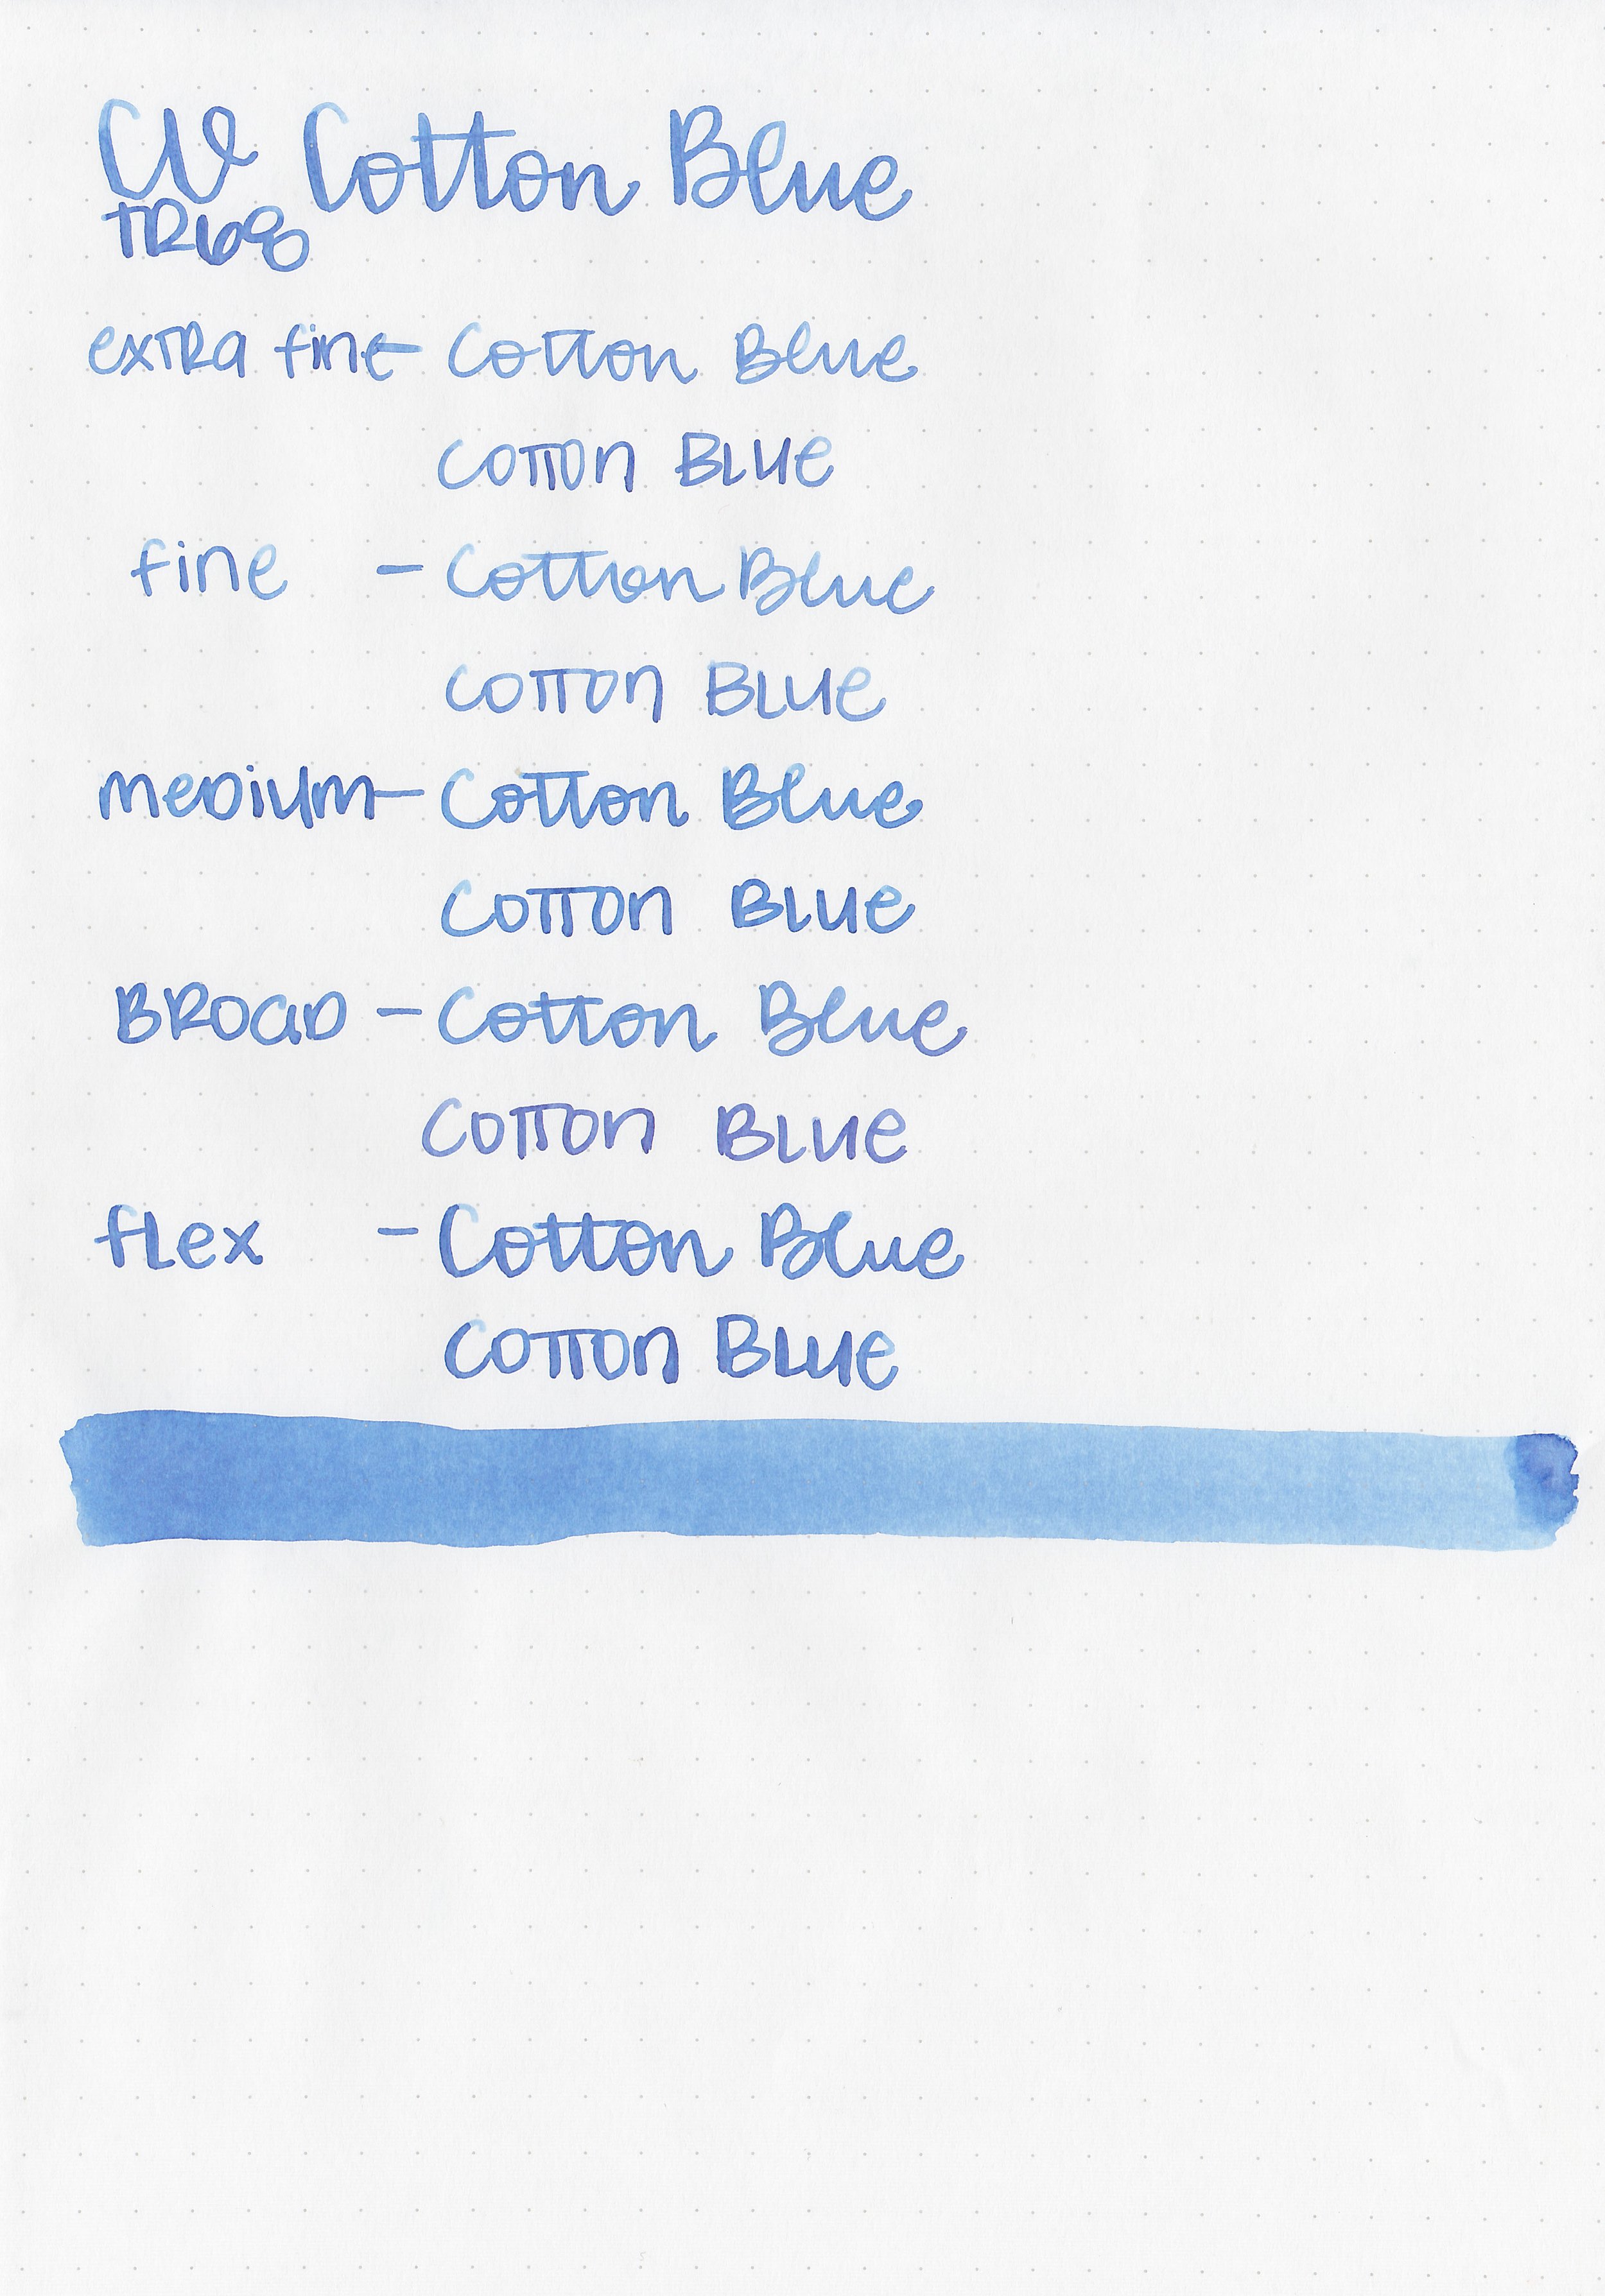 cv-cotton-blue-8.jpg